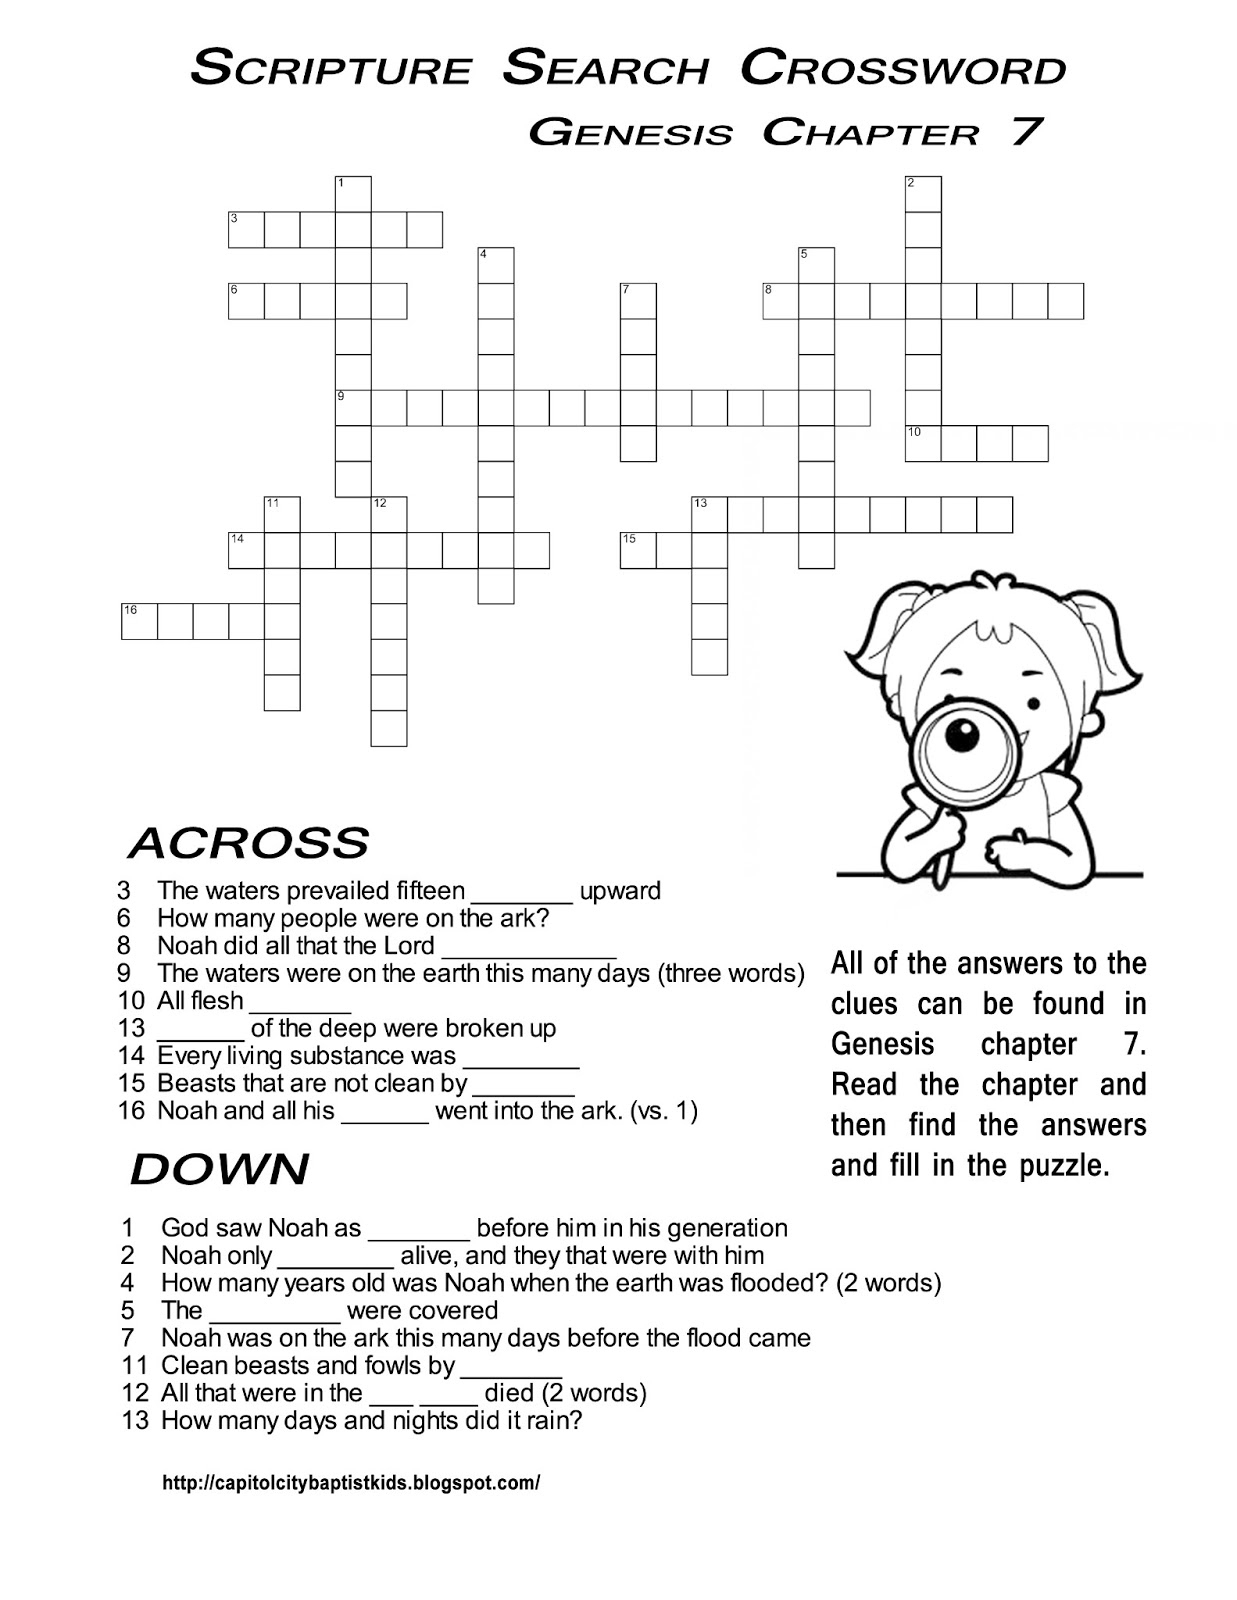 Ccbc Kids Corner: Scripture Search Crossword #2 - February Crossword Puzzle Printable